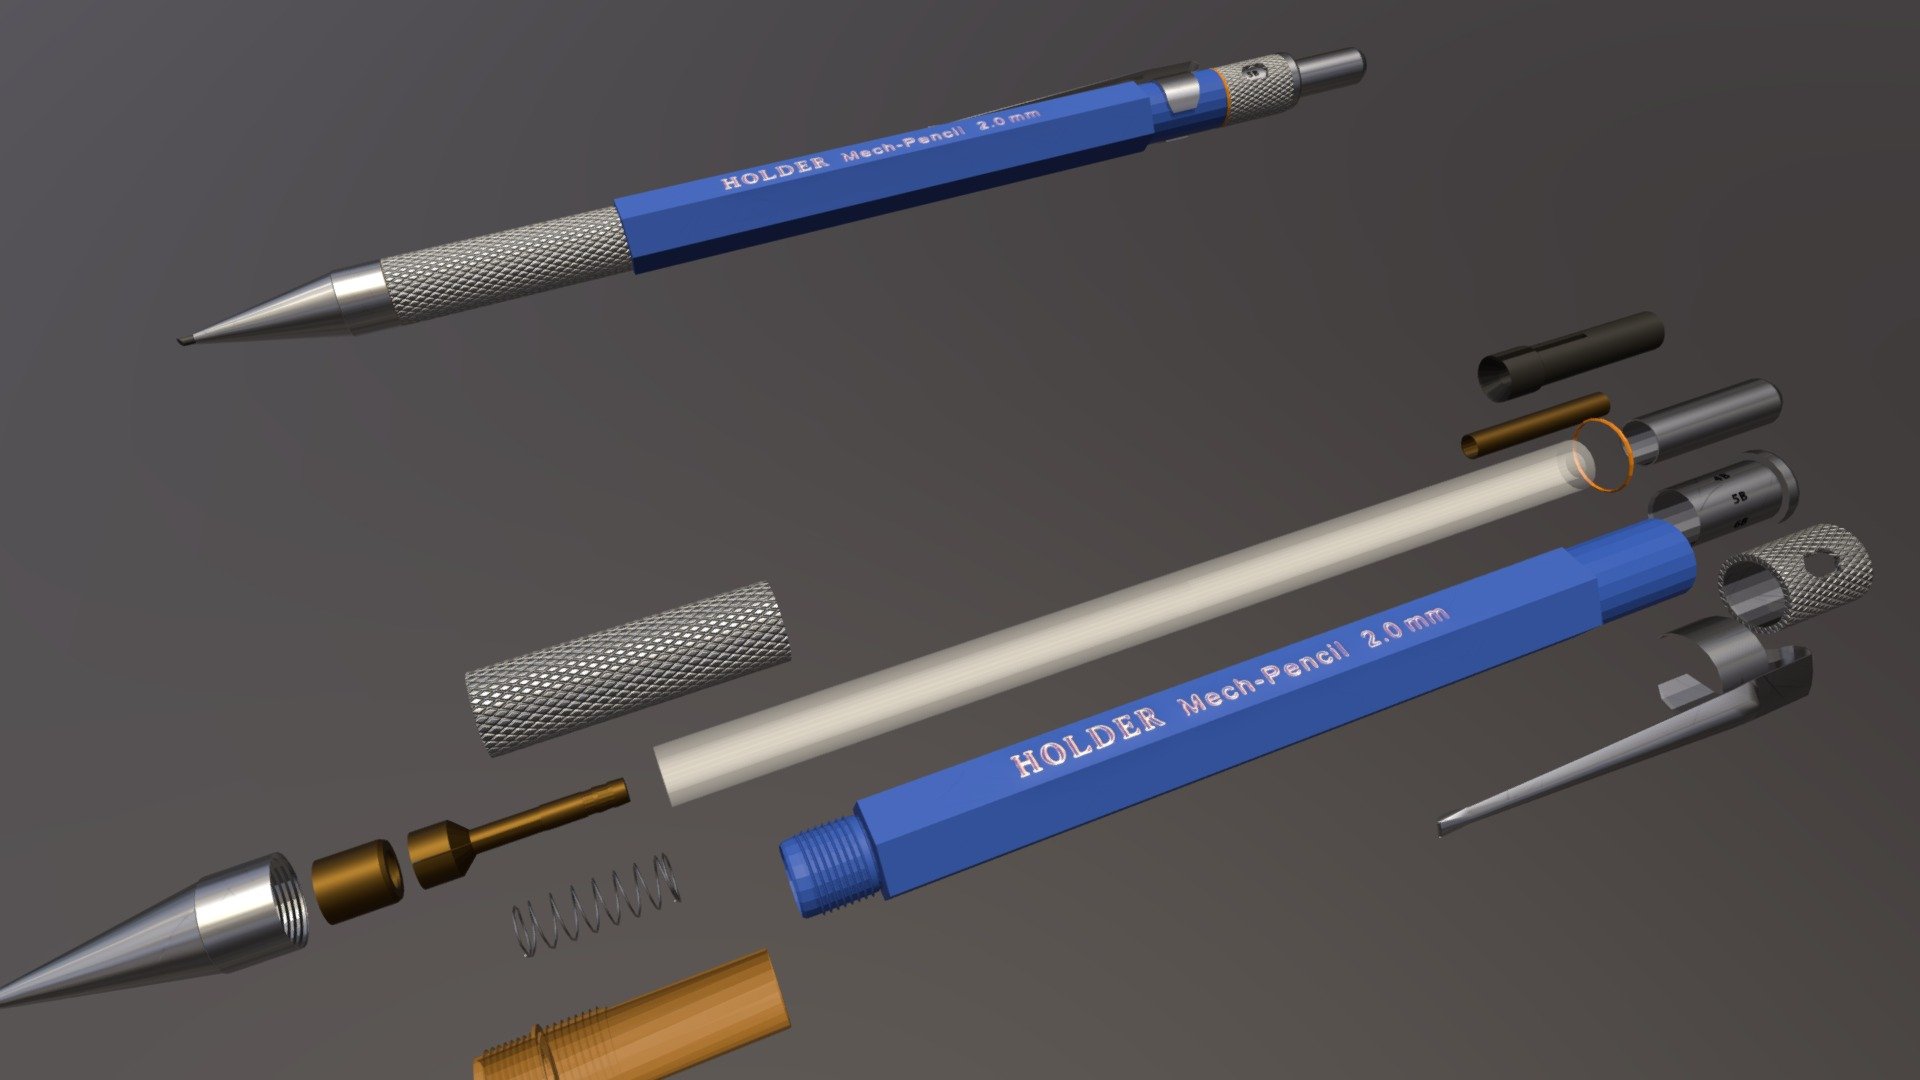 A 3d model of my mechanical pencil(HOLDER) for an assignment for CGI I.
All I can say is - R.I.P. my Mech Pen 3d model